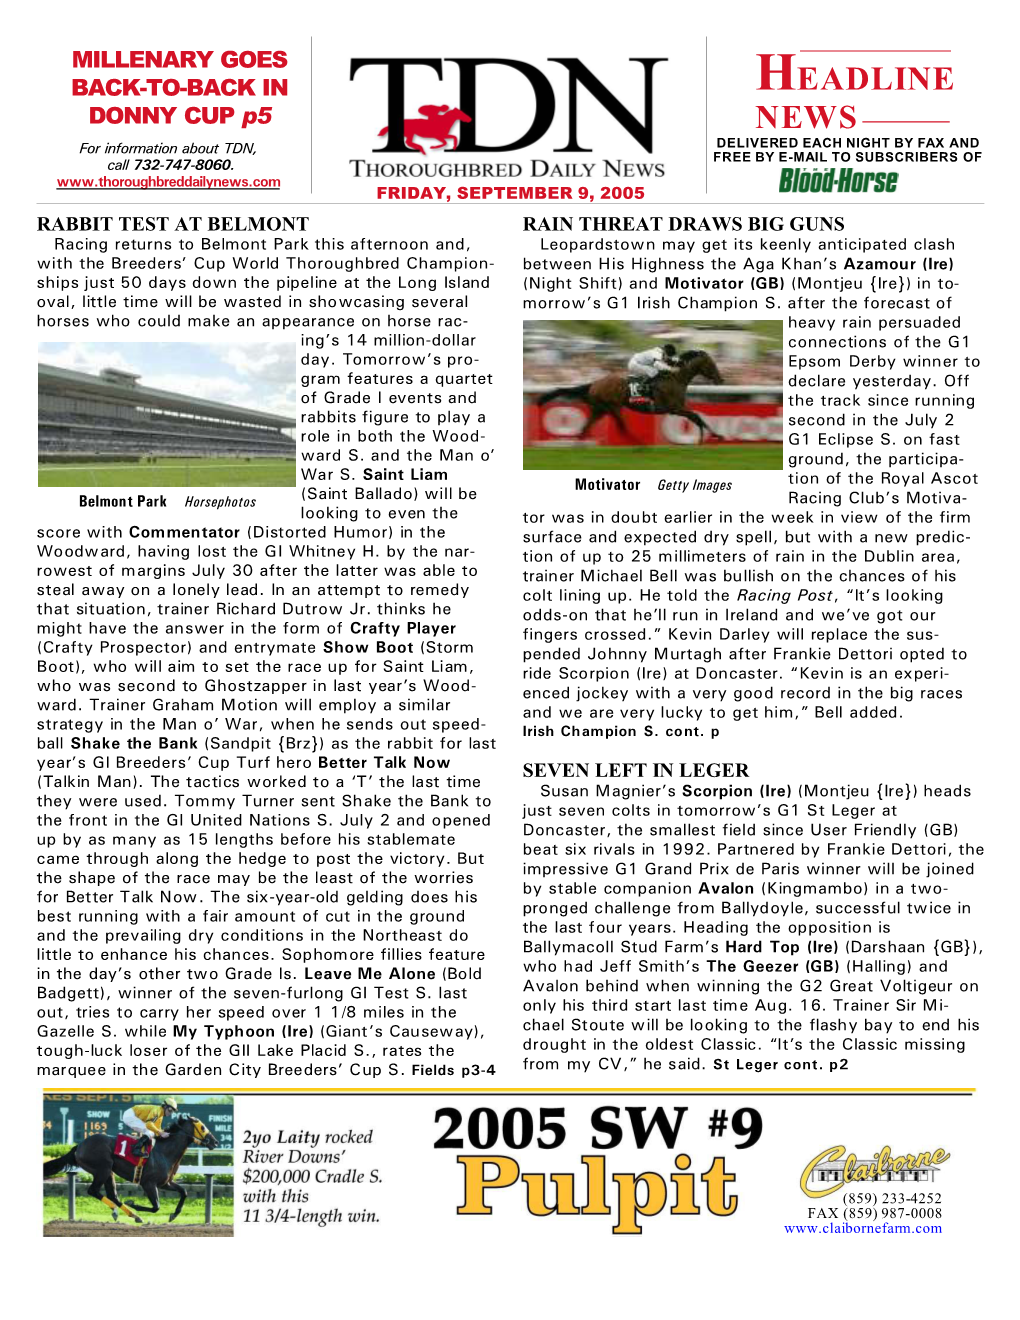 HEADLINE NEWS • 9/9/05 • PAGE 2 of 7